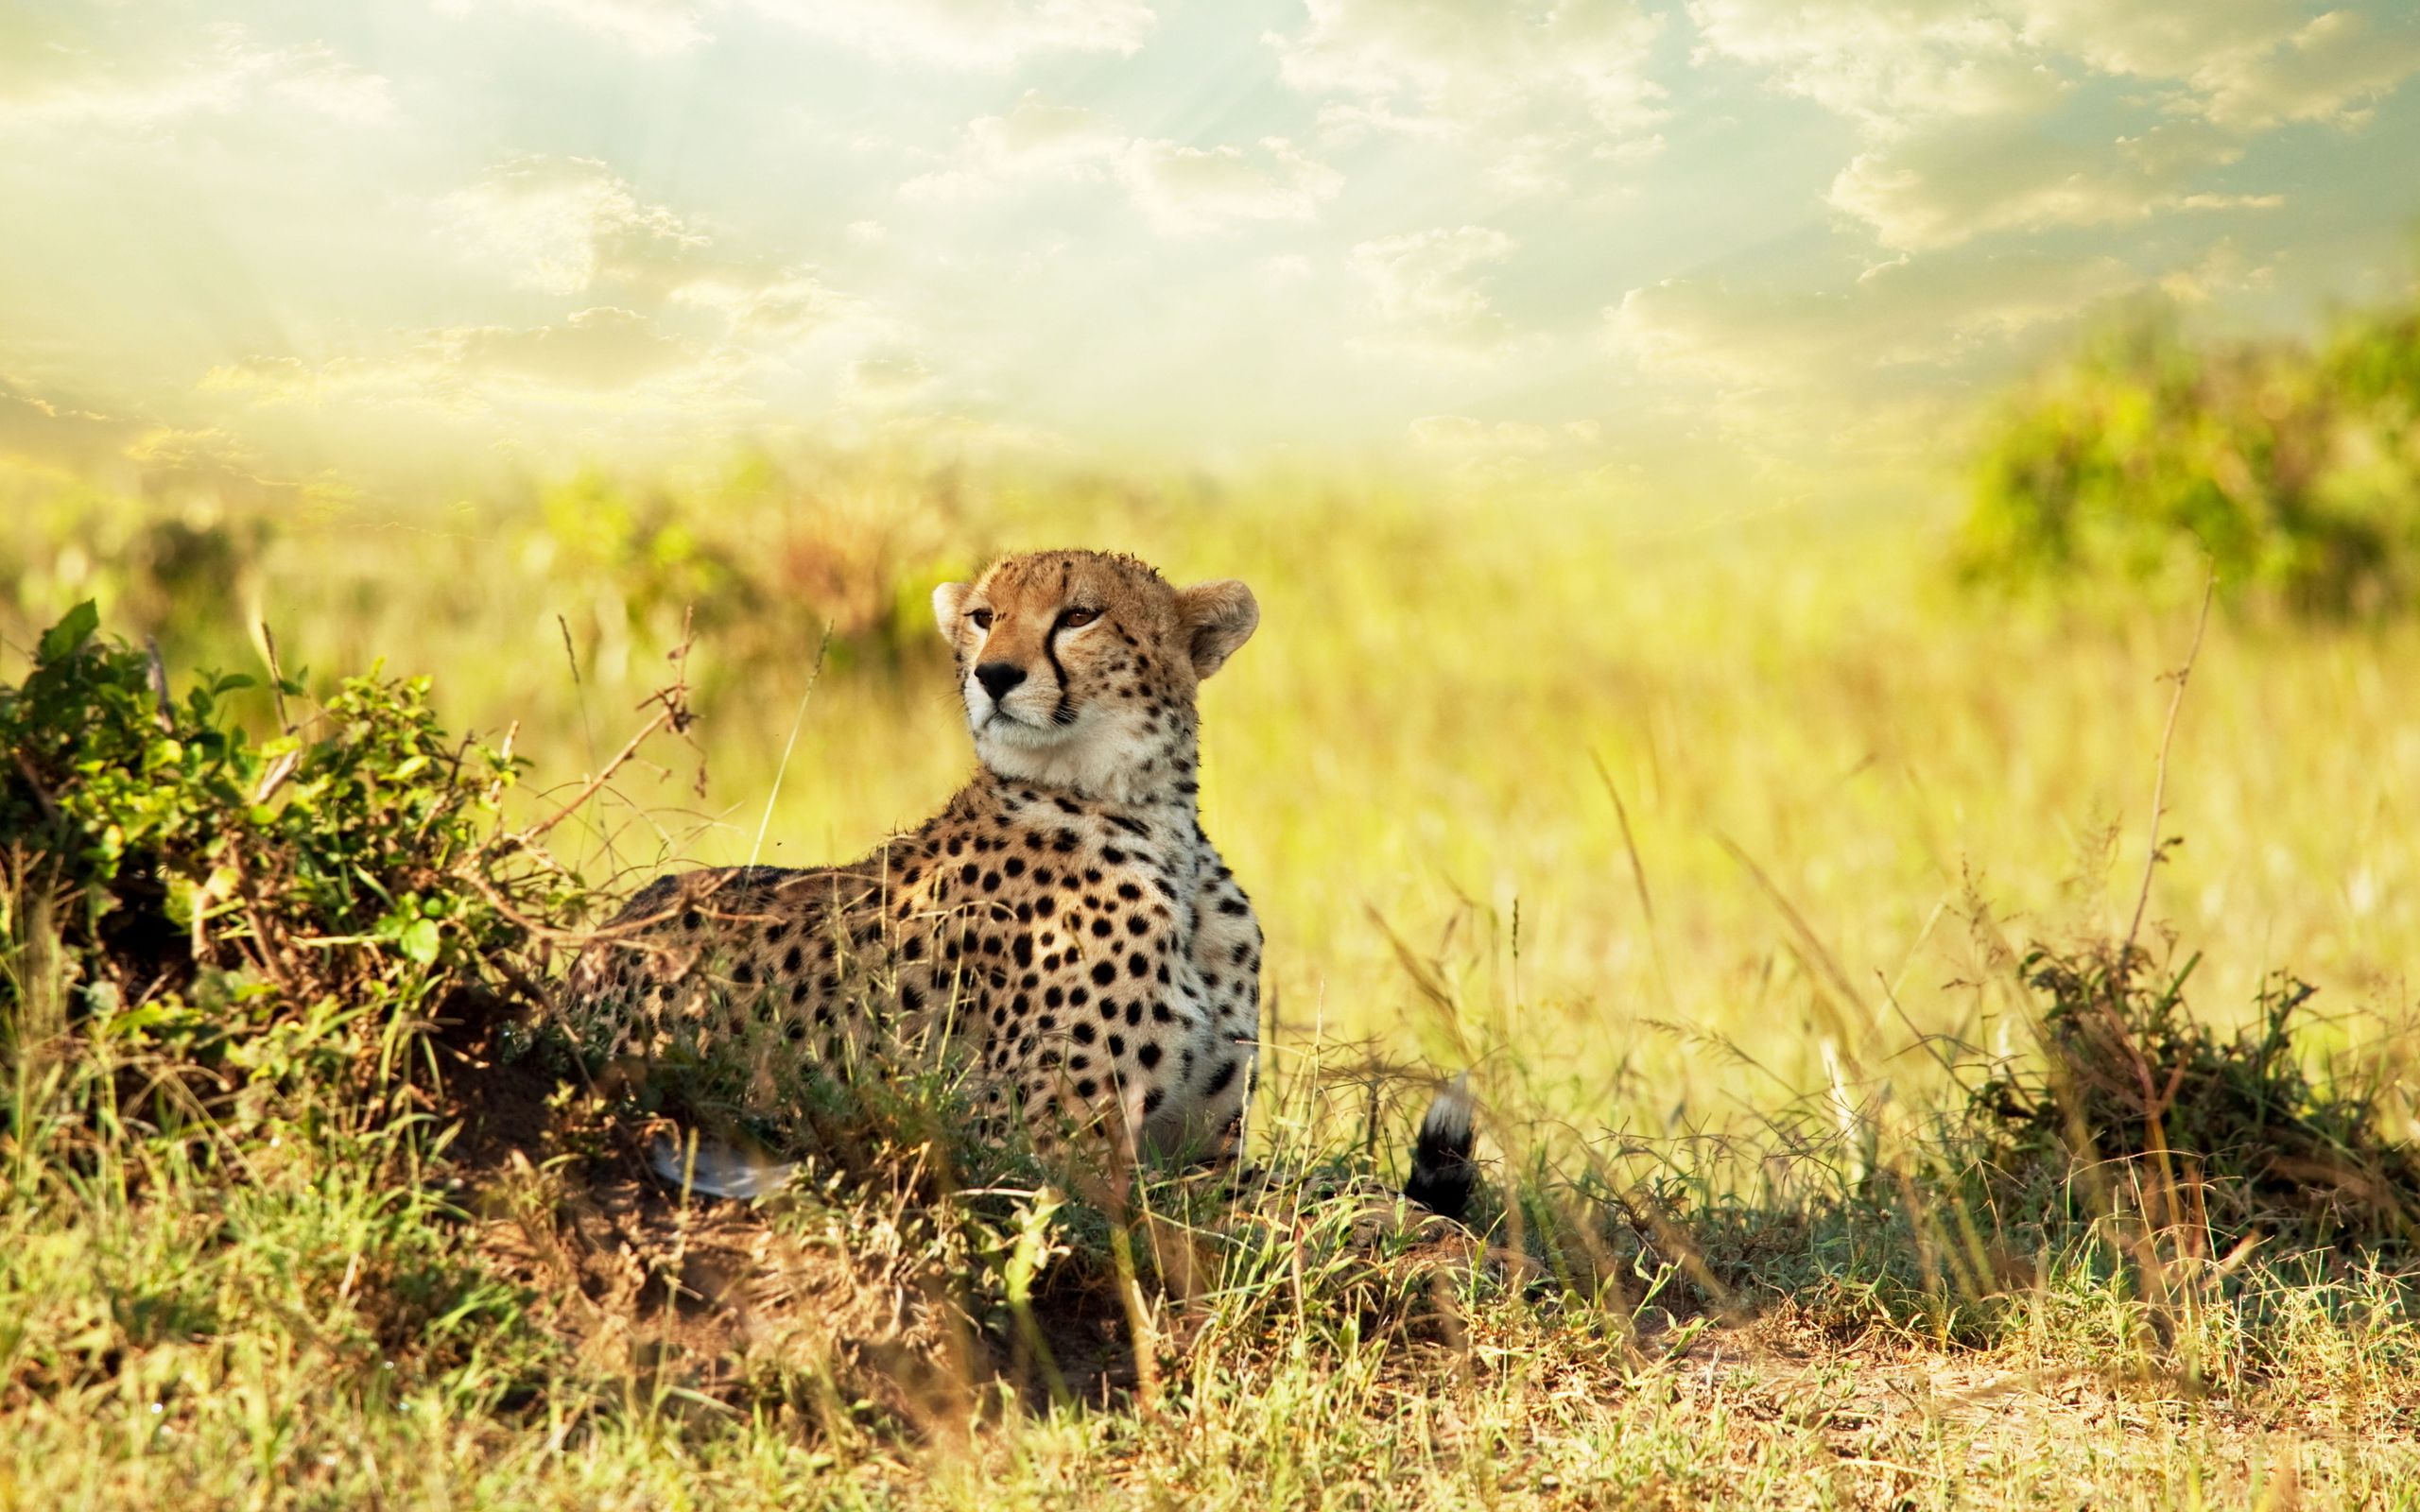 Cheetah Savanna Africa4917415692 - Cheetah Savanna Africa - Savanna, Lion, Cheetah, Africa